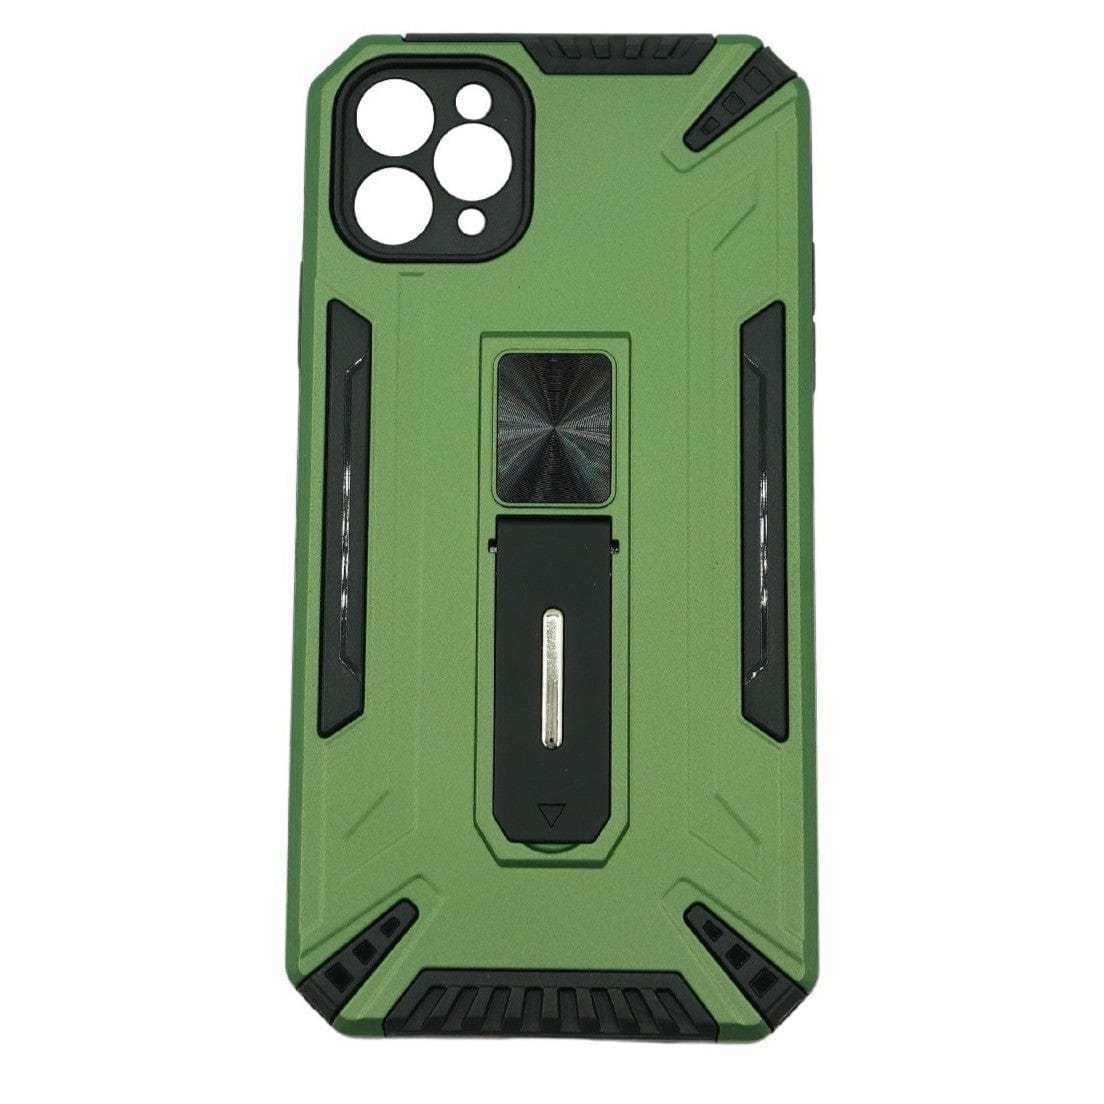 Husa de protectie pentru Apple iPhone 12 Mini Defender Model 4 cu suport, Verde deschis